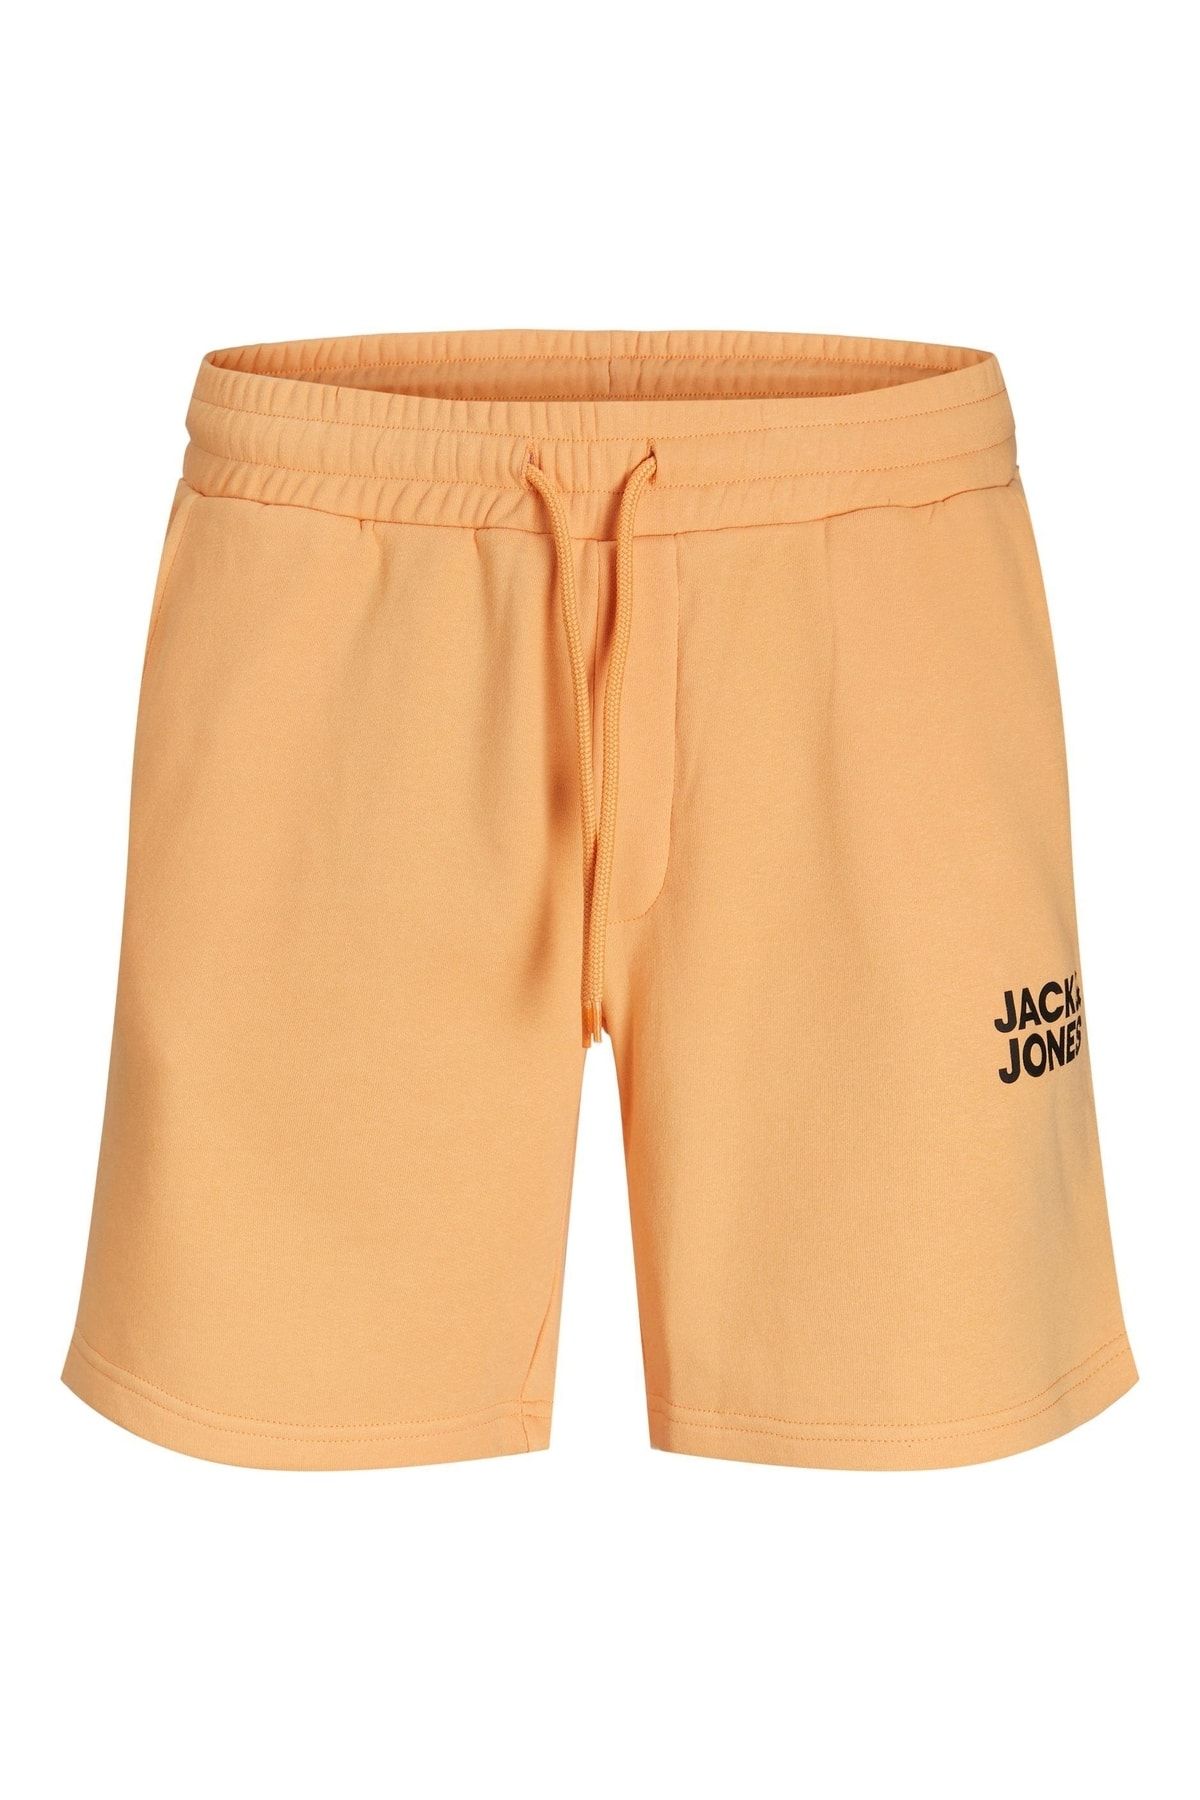 Jack & Jones Jack Jones Stnewsoft Sweat Shorts Bex Sn Erkek Pembe Şort 12228920-20